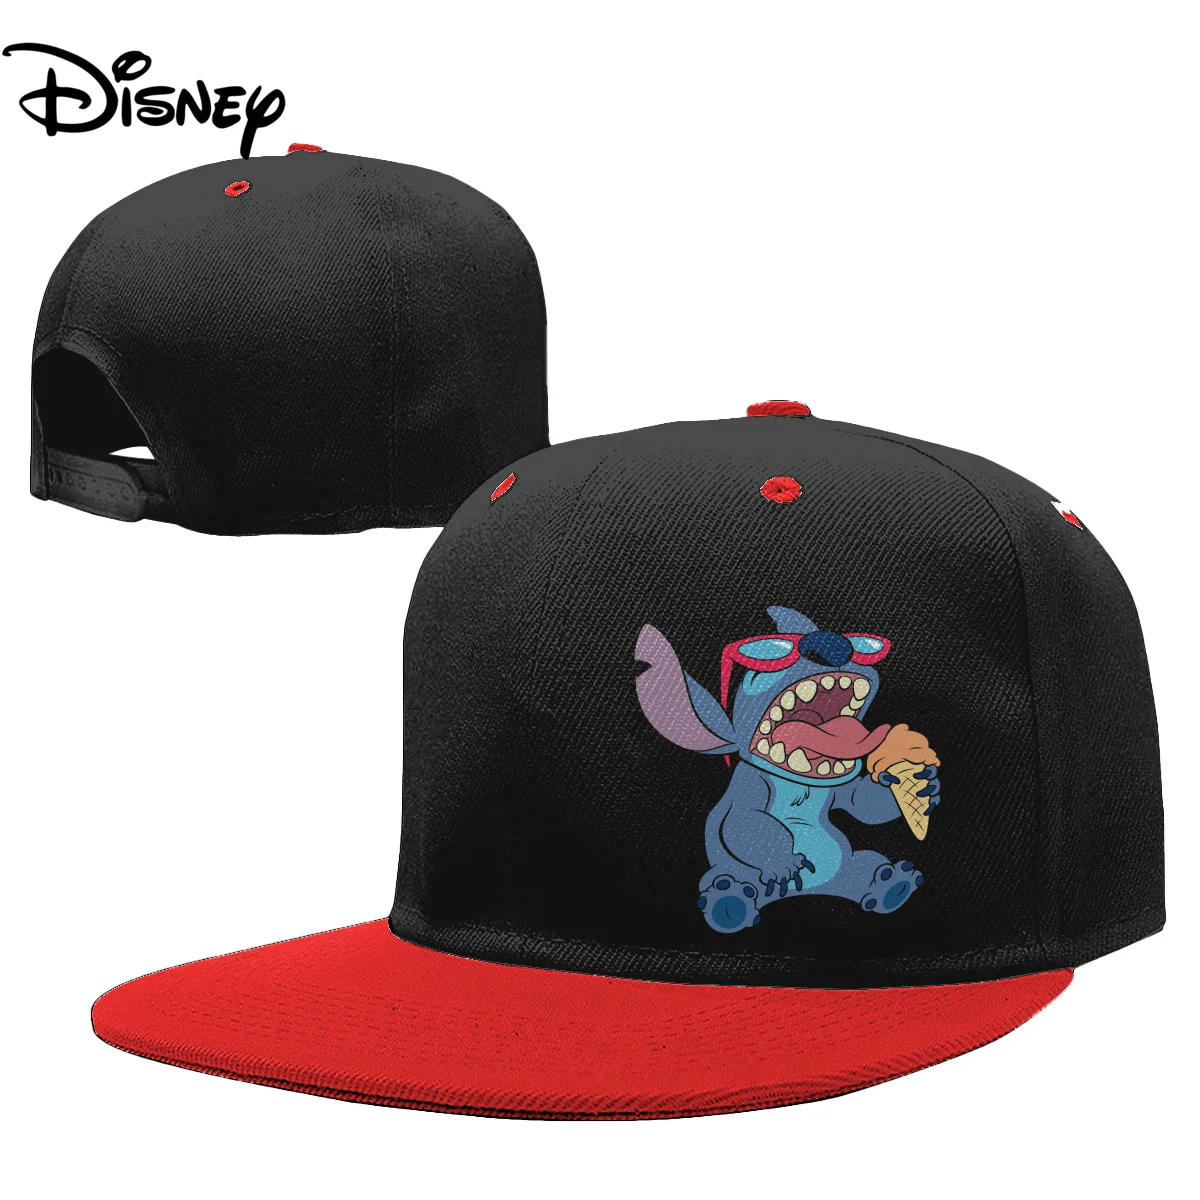 

Disney Children Hip-hop Cap Breathable Sun Hat Boy Girls Cartoon Stitch Baseball Cap Summer Outdoor Sport Adjustable Visors Hat